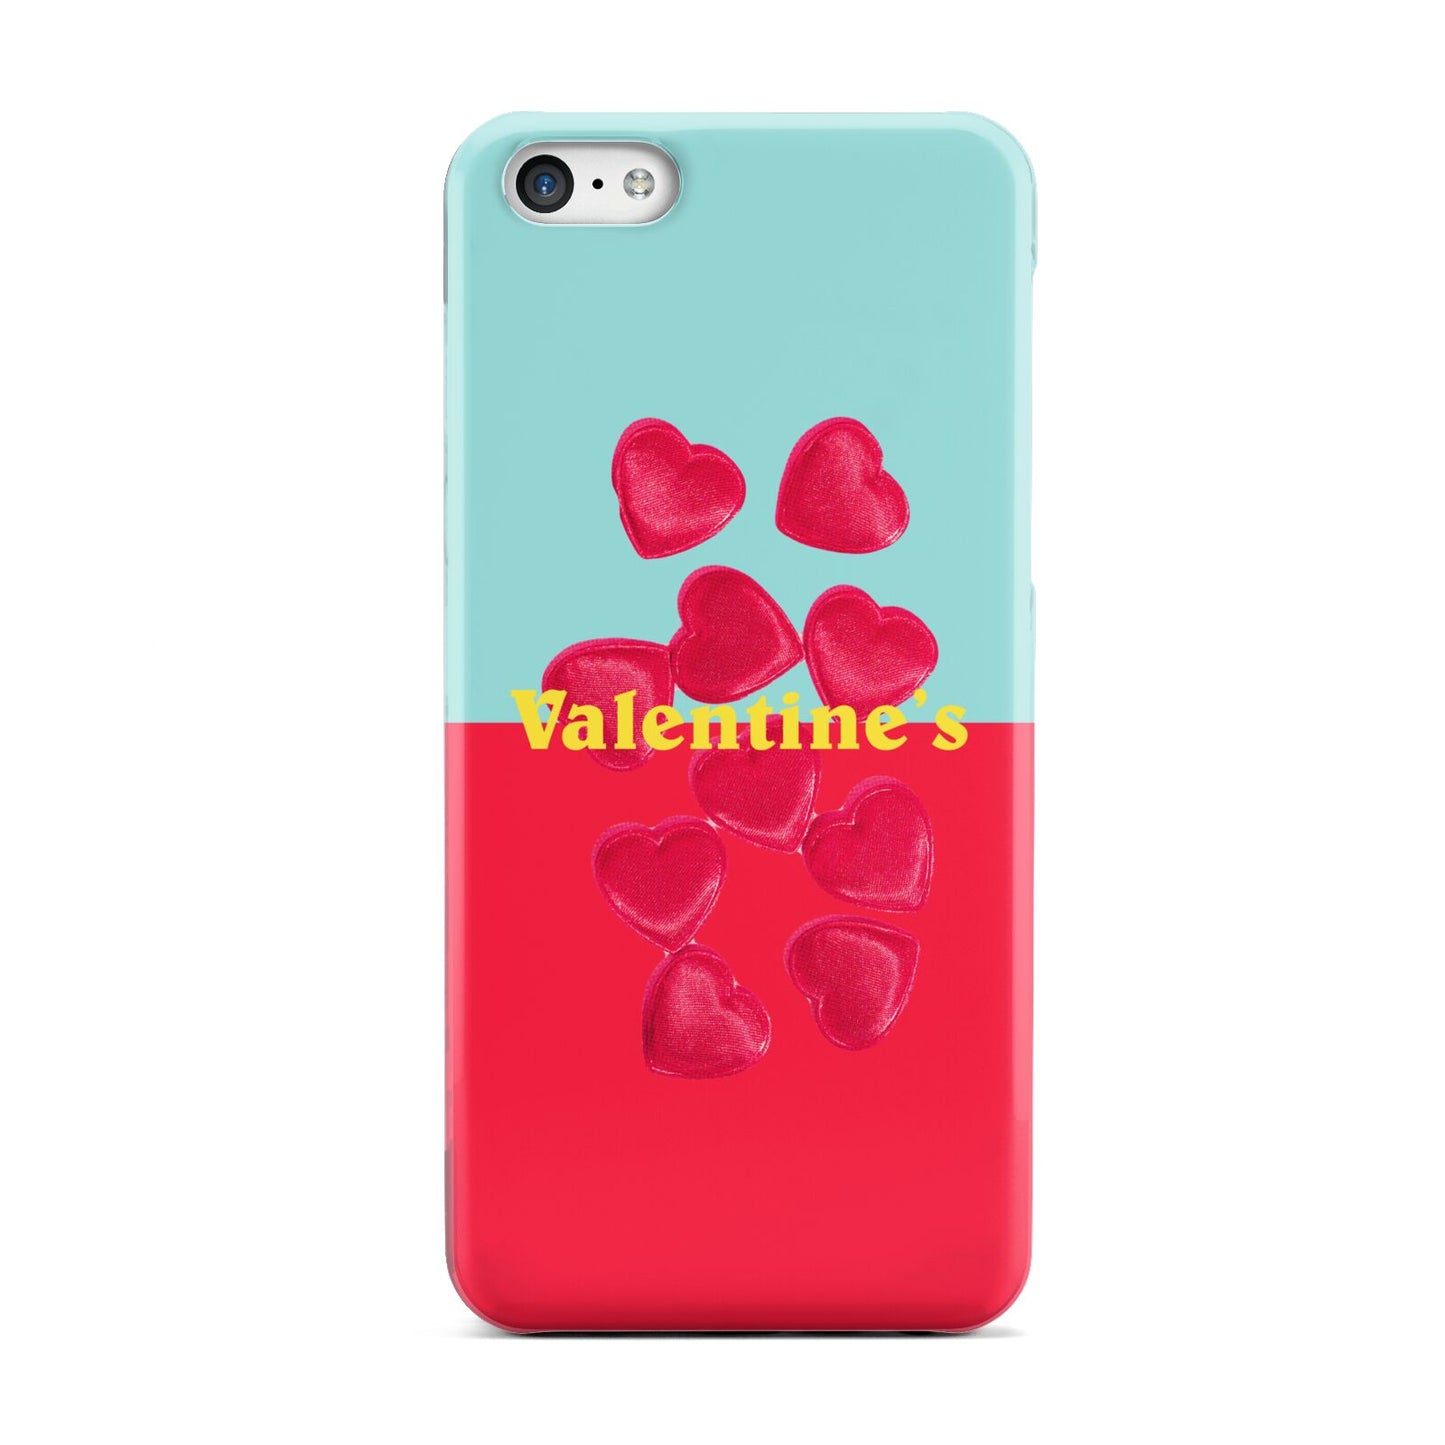 Valentines Sweets Apple iPhone 5c Case